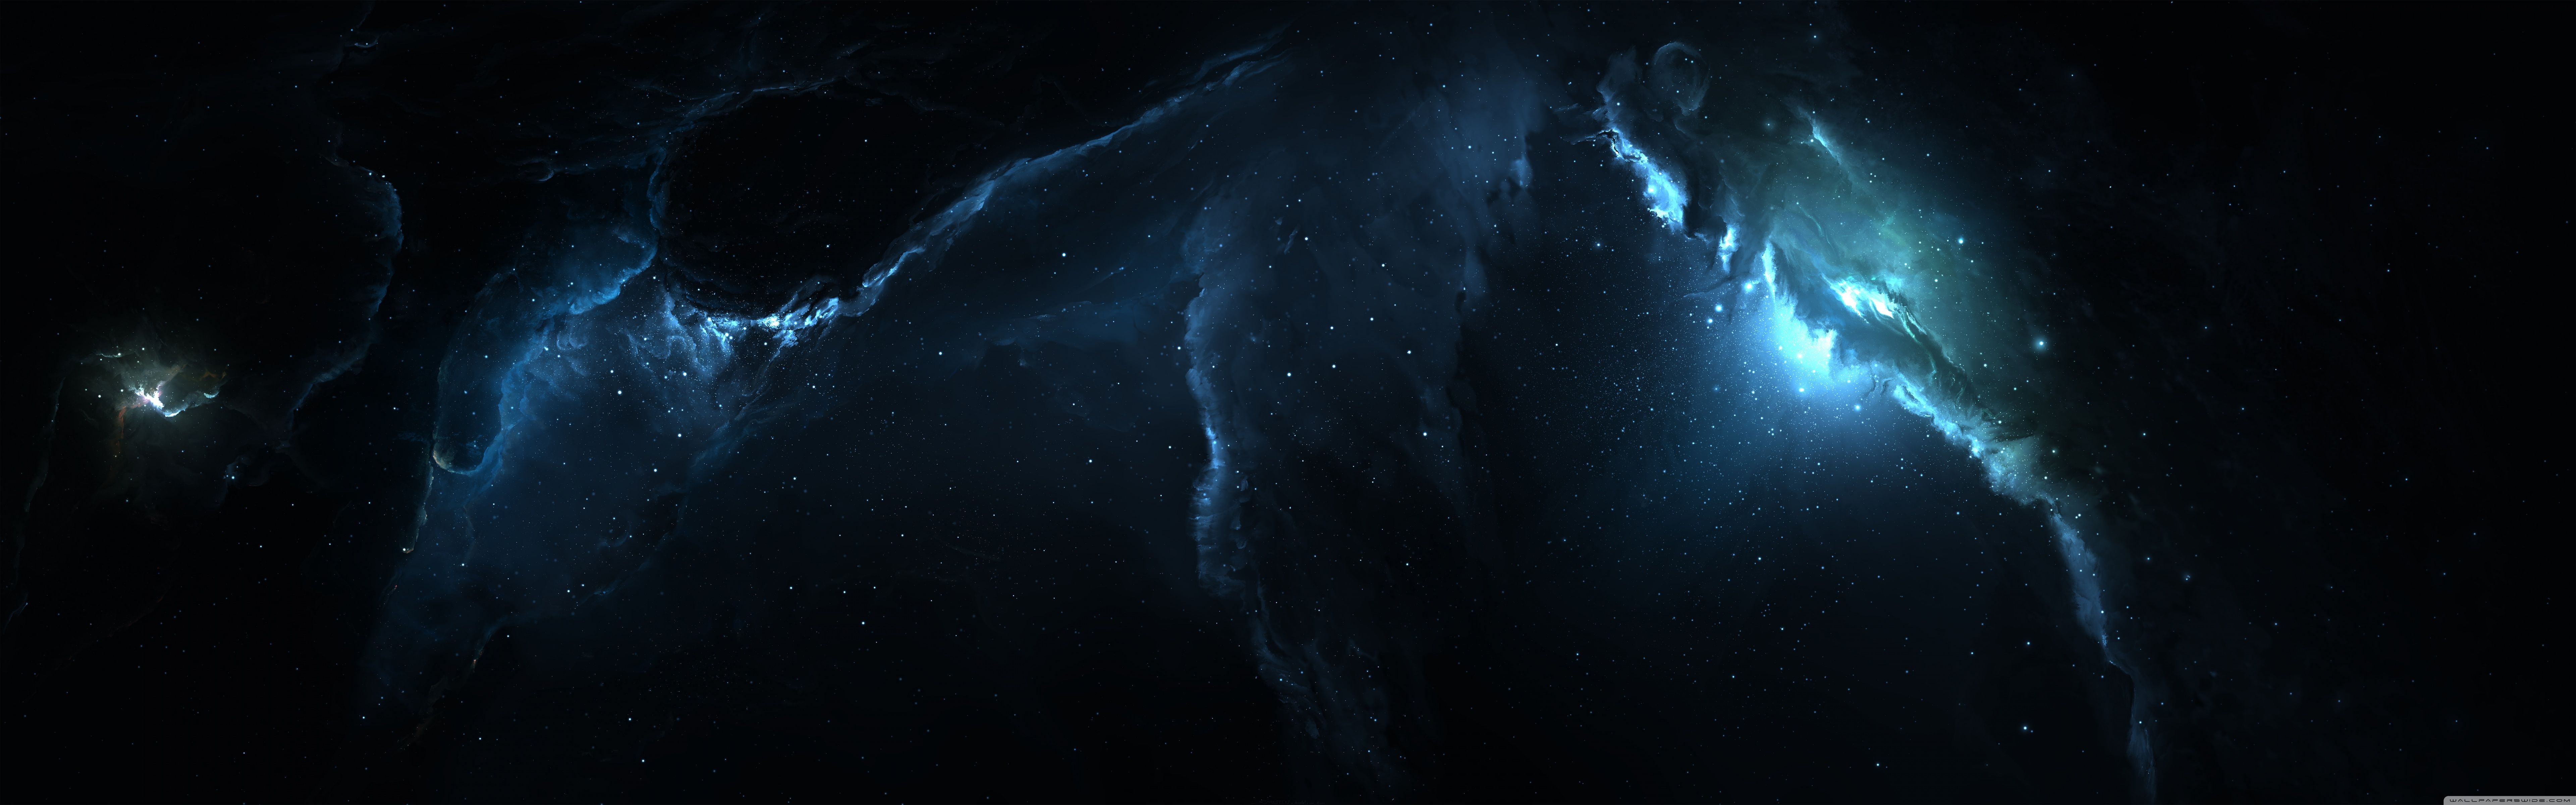 Atlantis Nebula 3 Dual Monitor Wallpaper Full HD [7680x2400 ...